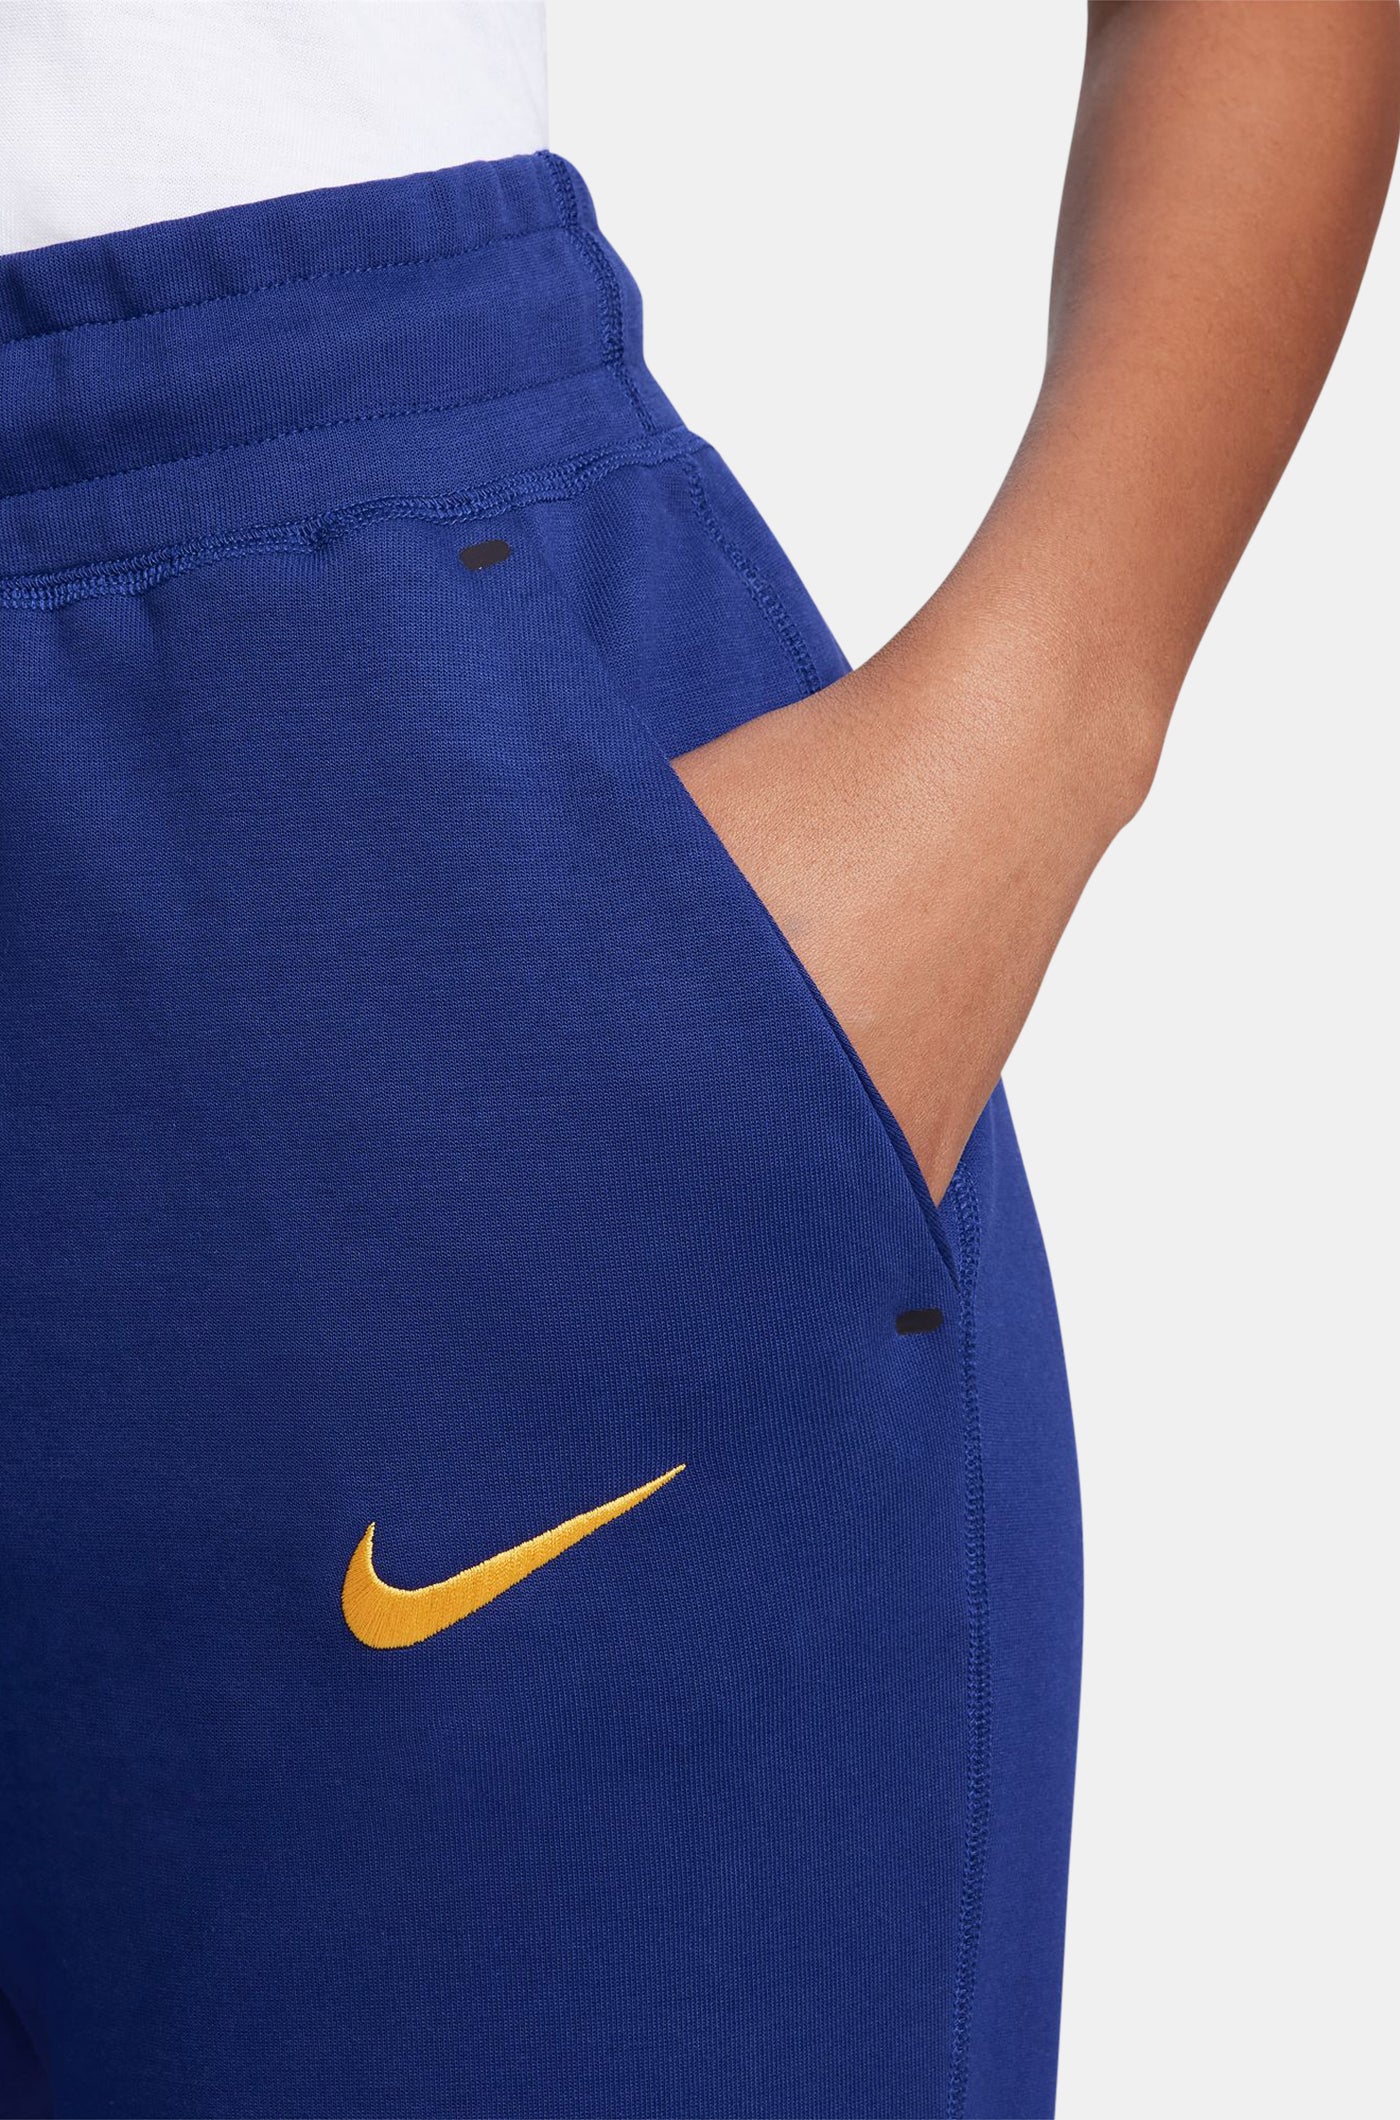 Blaue Tech-Hose von Barça Nike – Damen